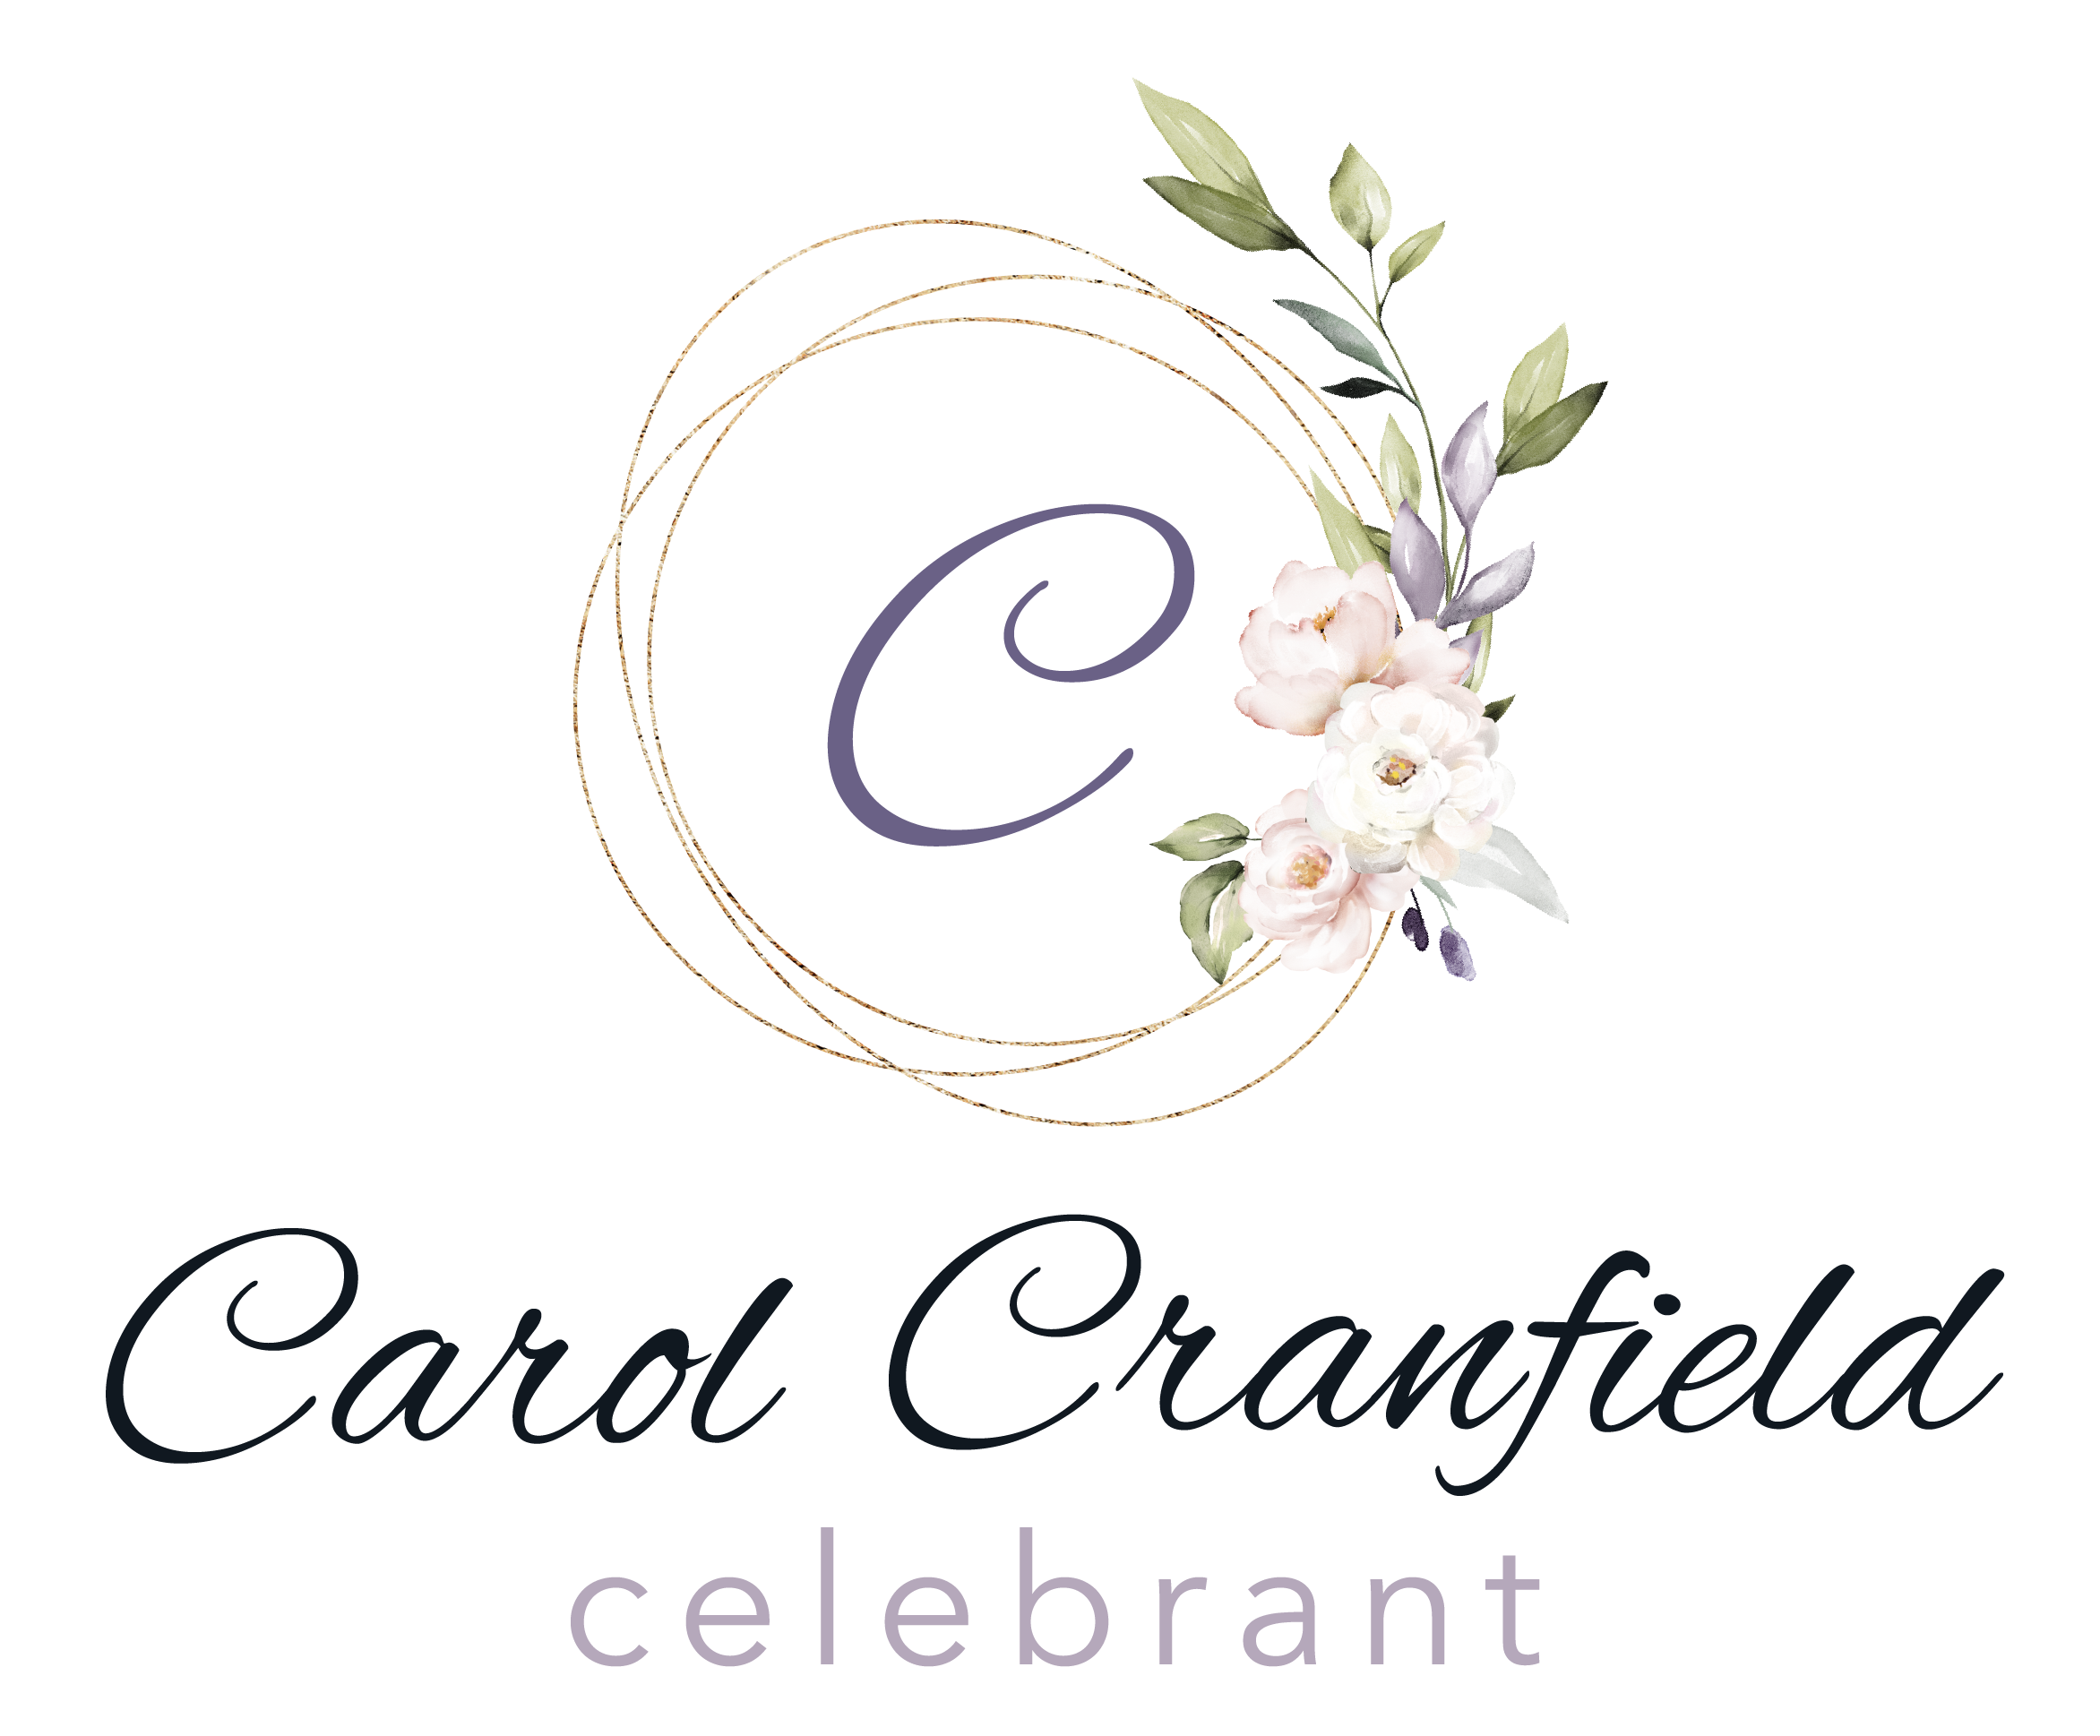 Carol Cranfield Celebrant